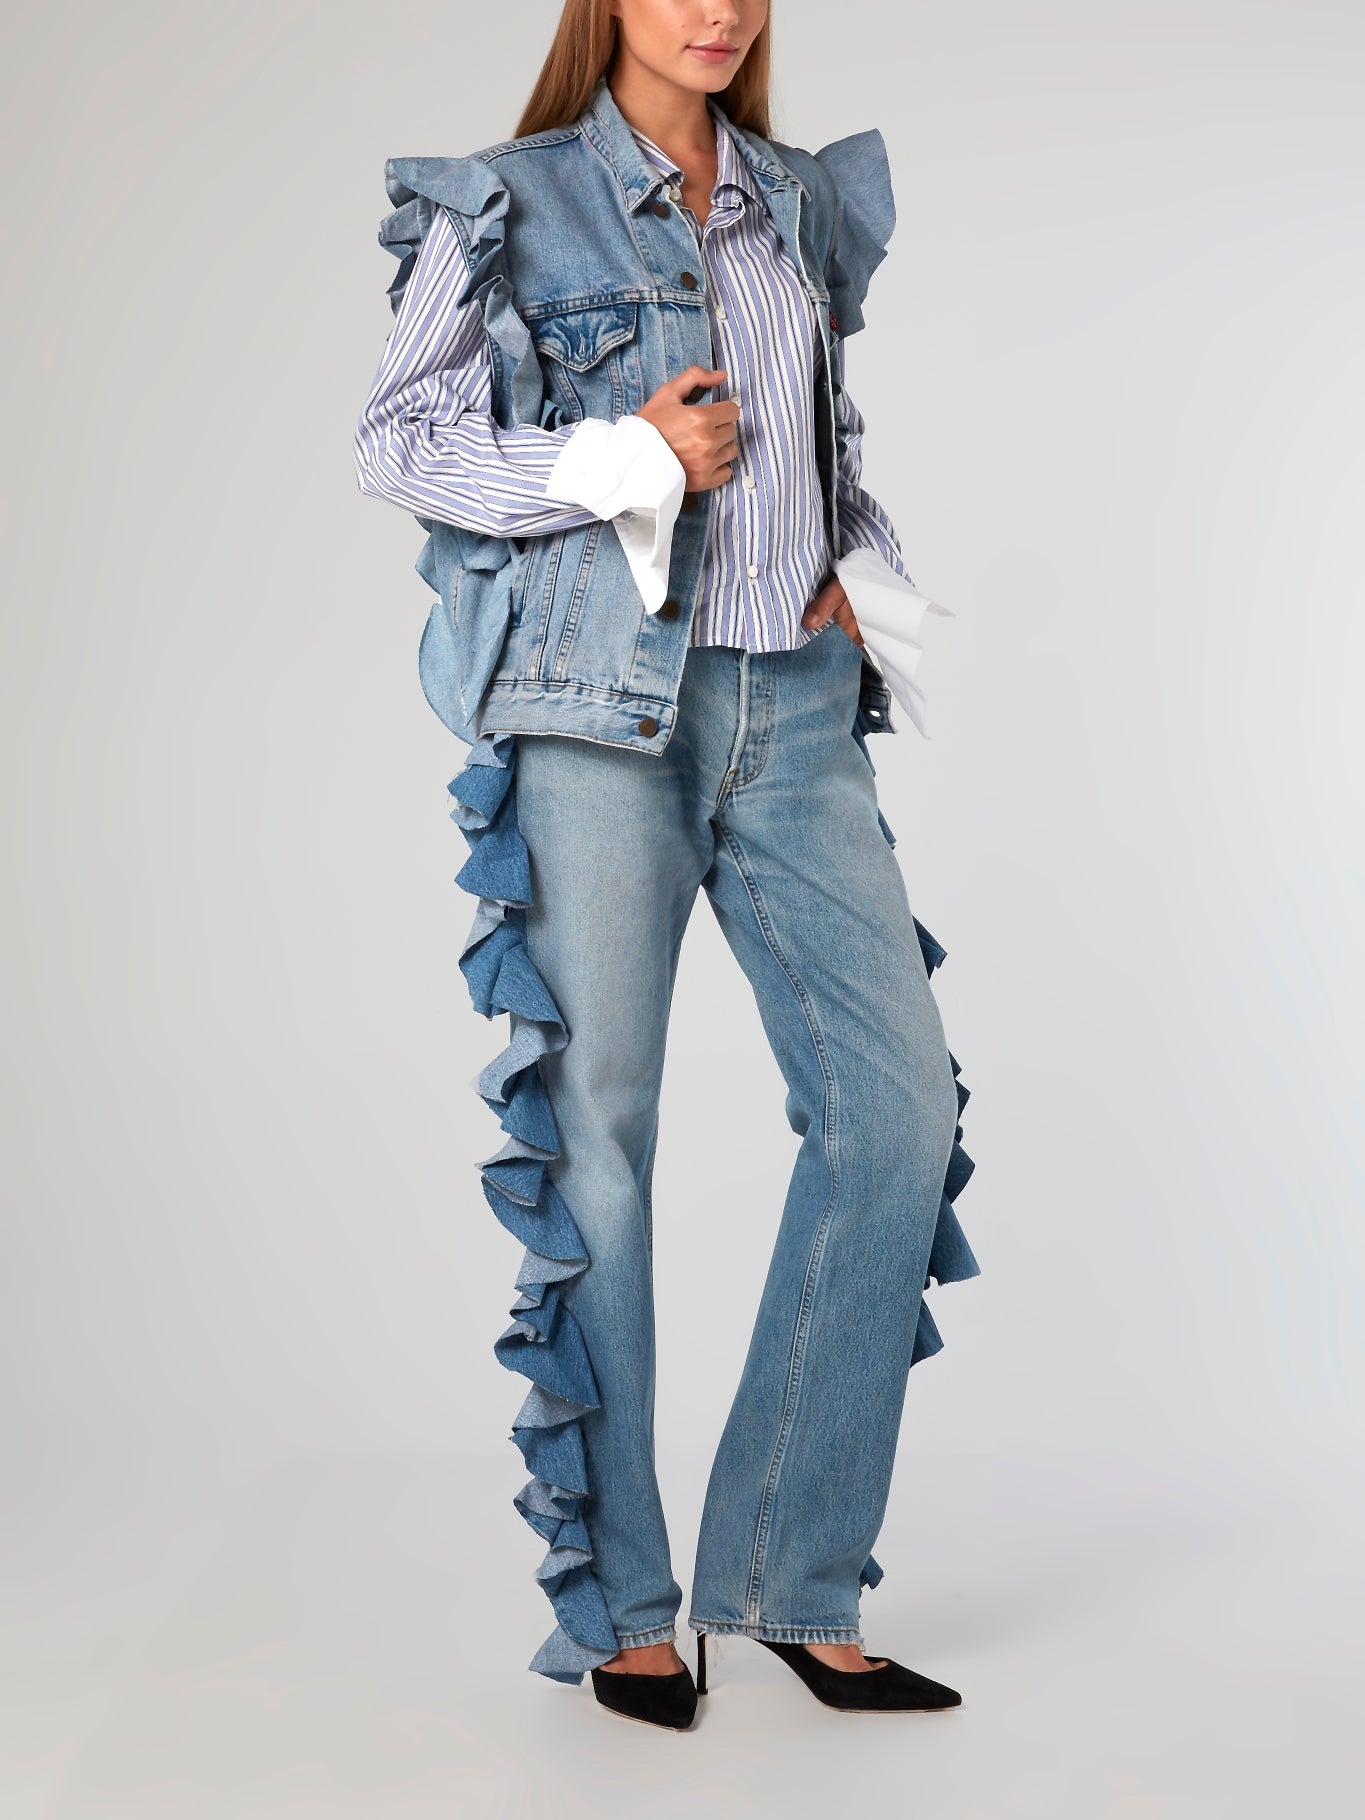 Bella | Denim flare jeans, Denim flares, Ruffle shirt